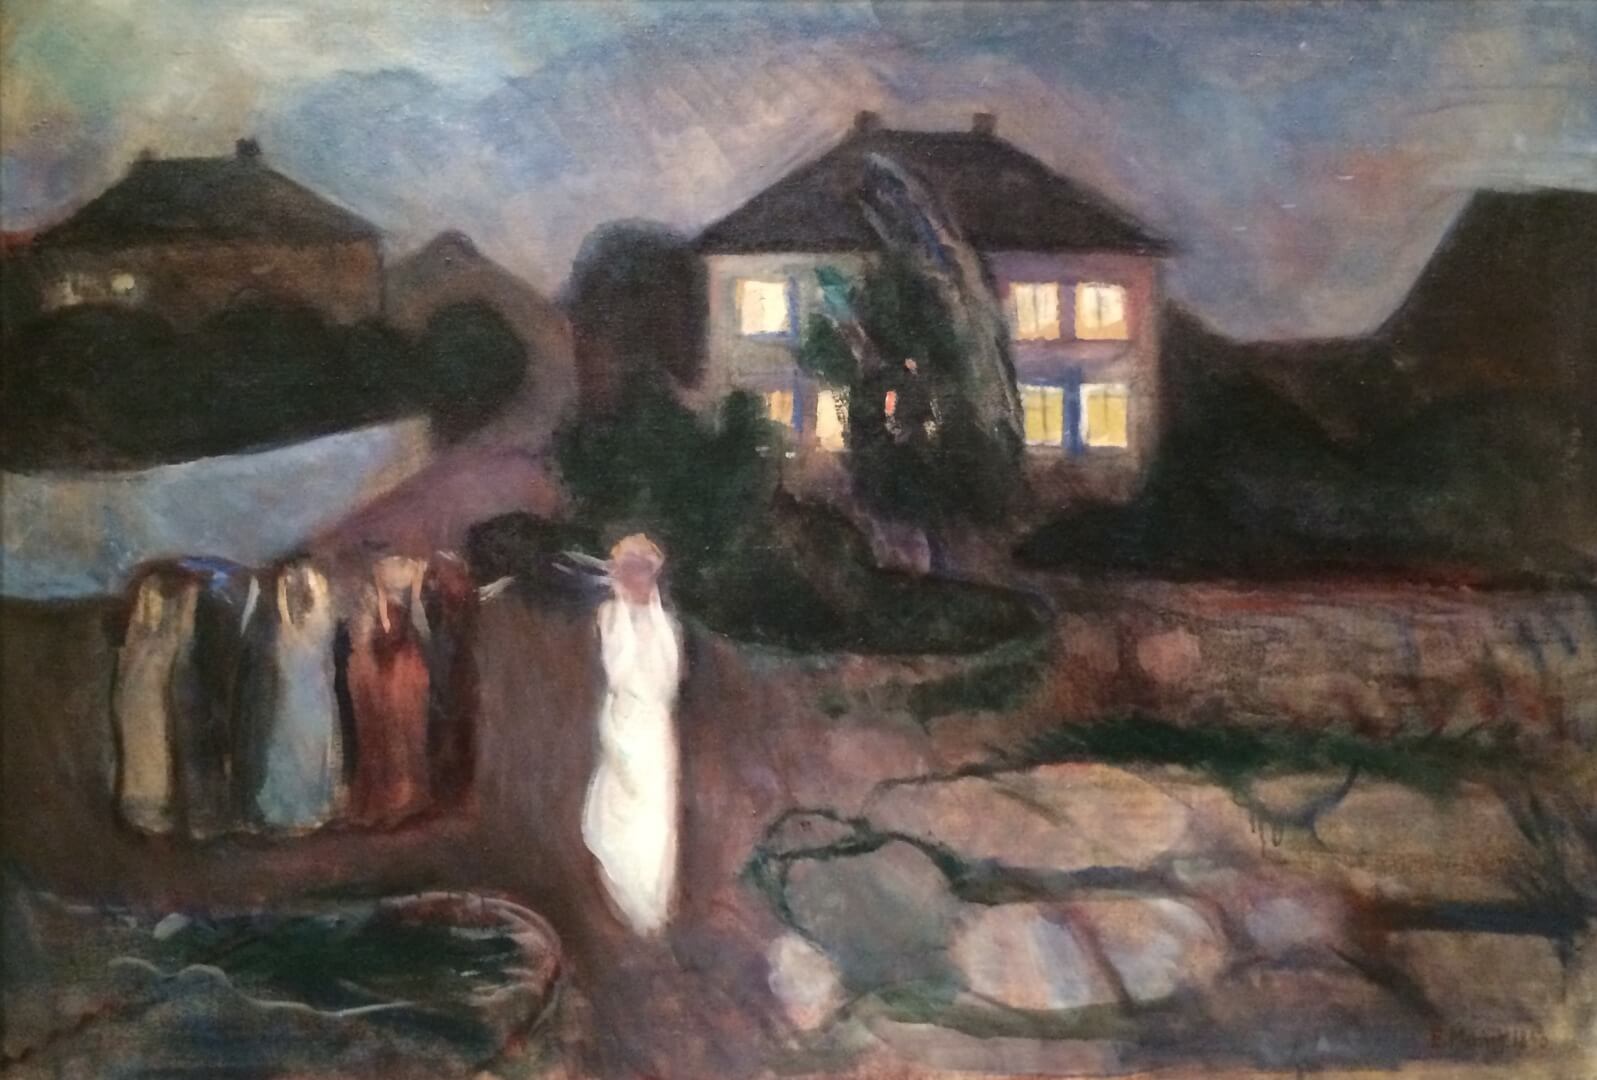 7_Edvard Munch, The Storm, 1893